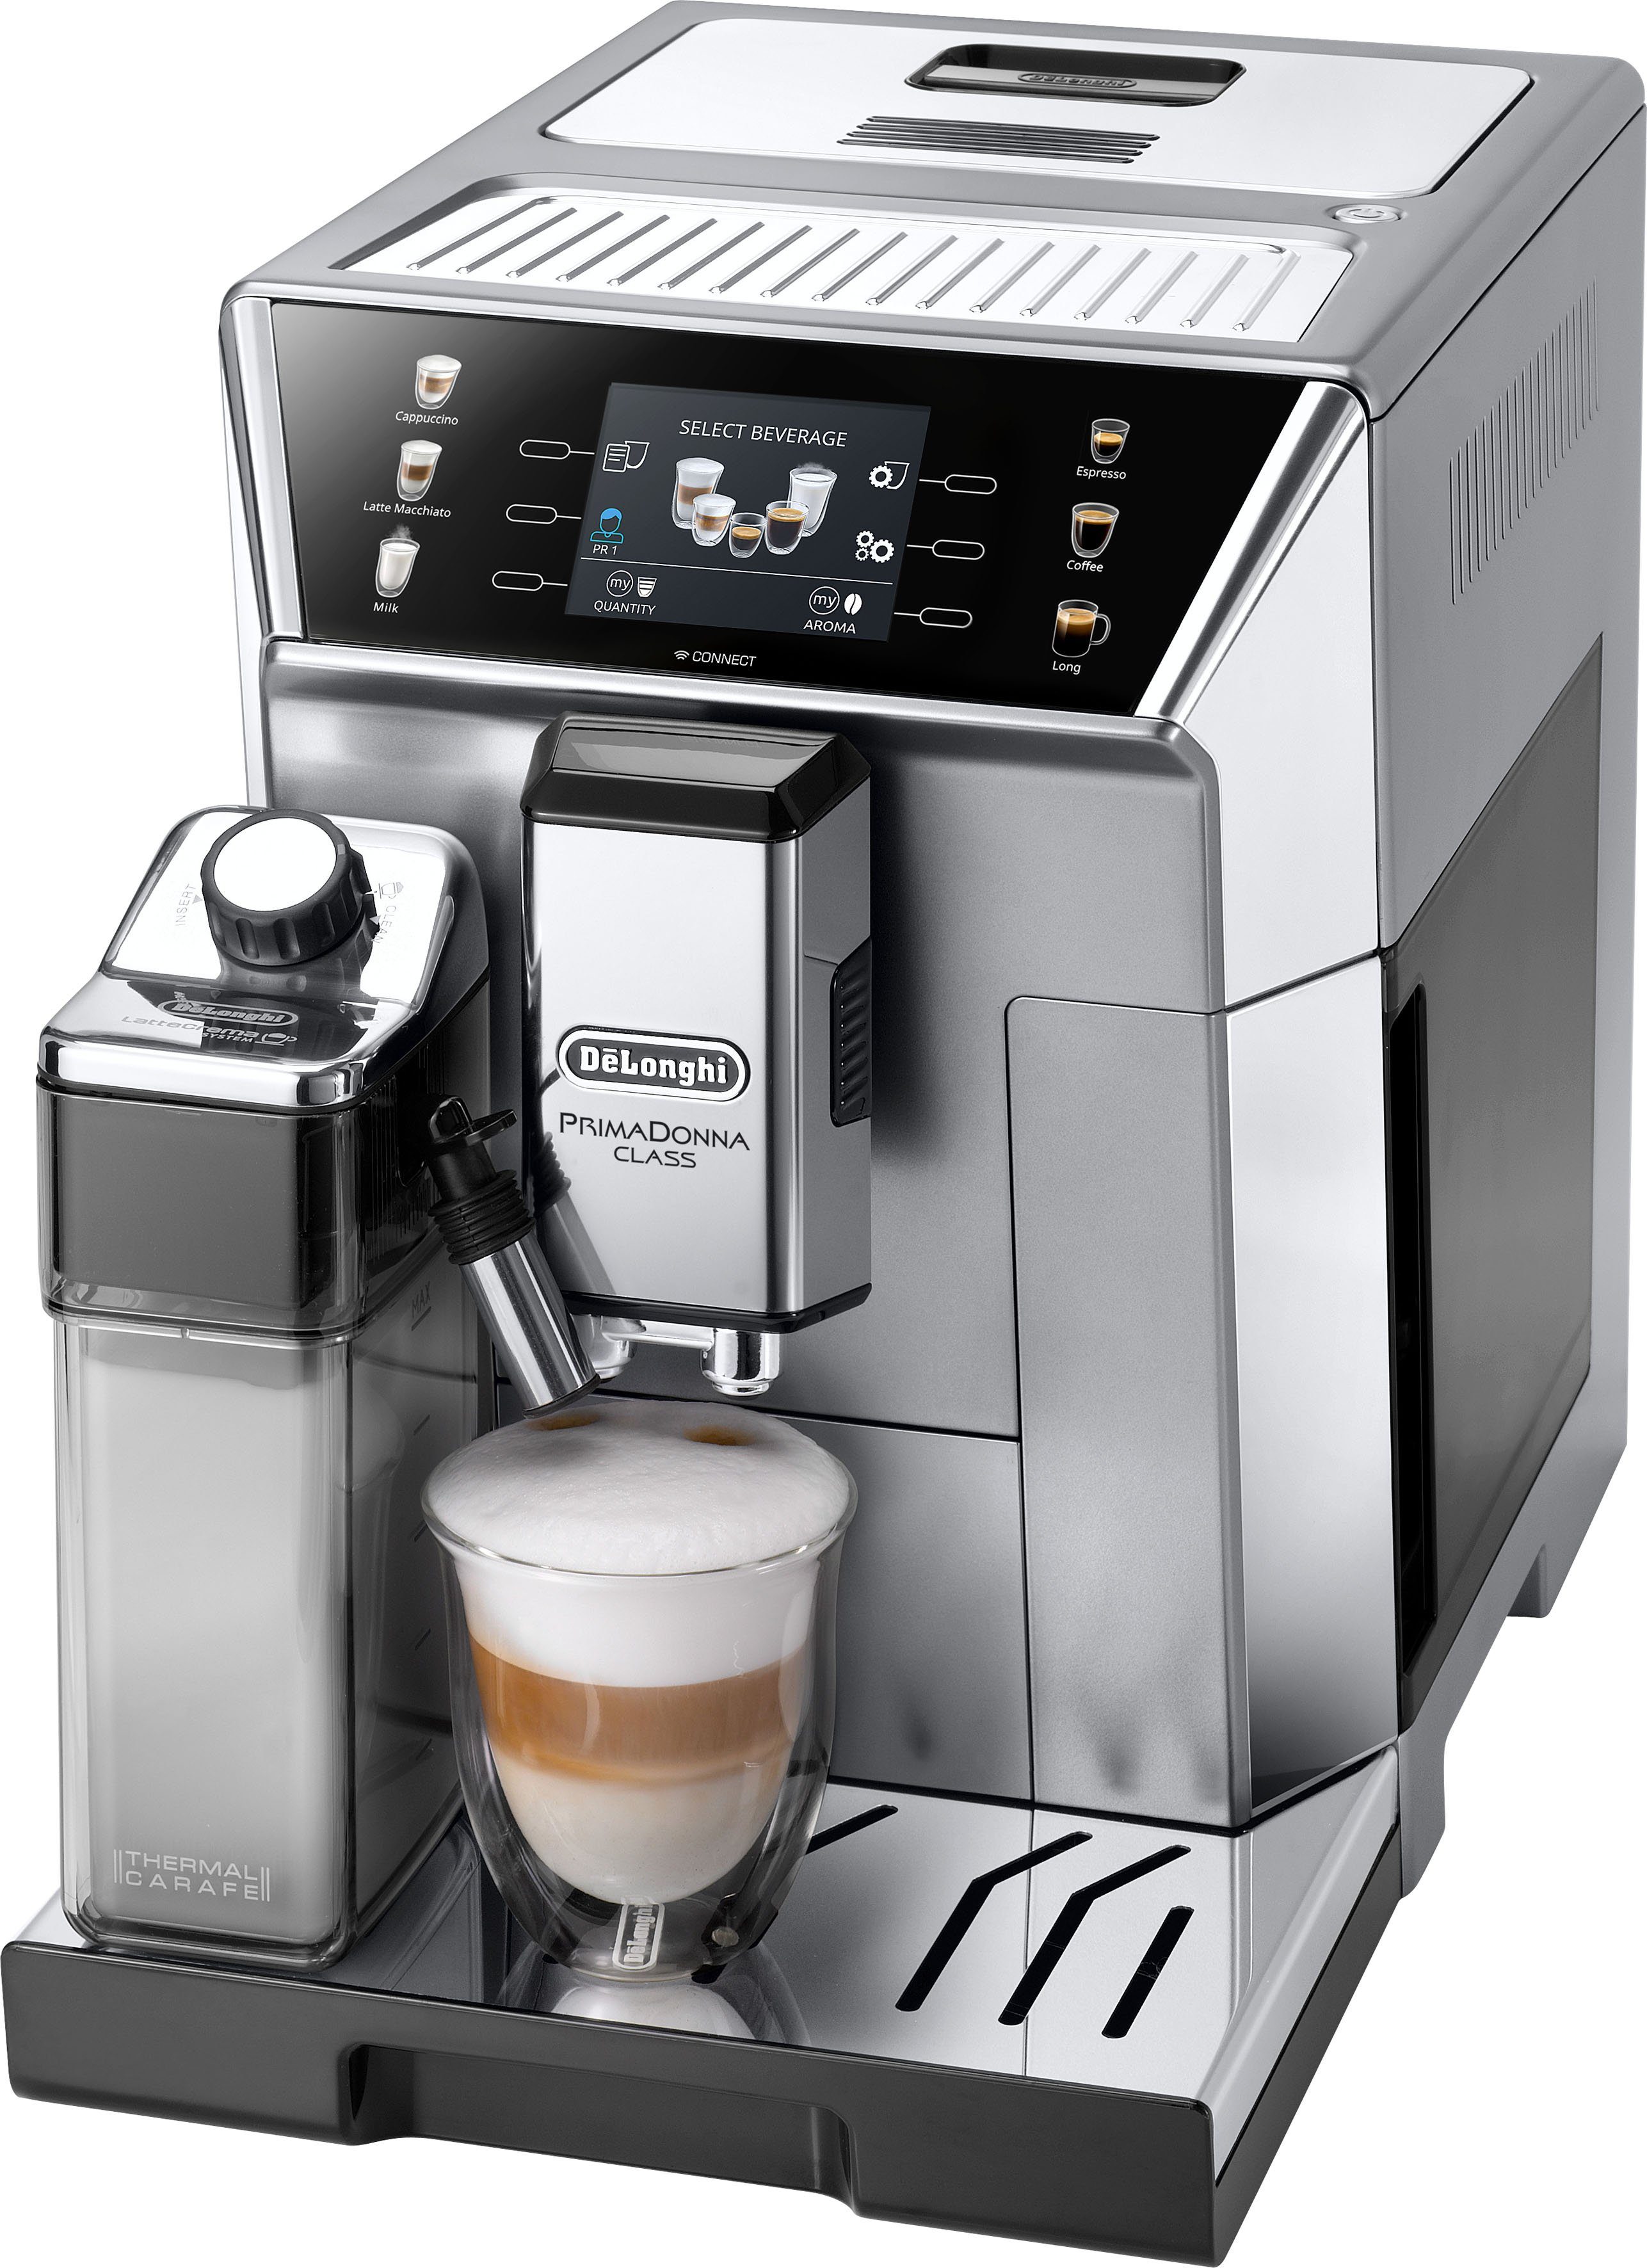 Günstige Kaffeevollautomaten online kaufen | OTTO